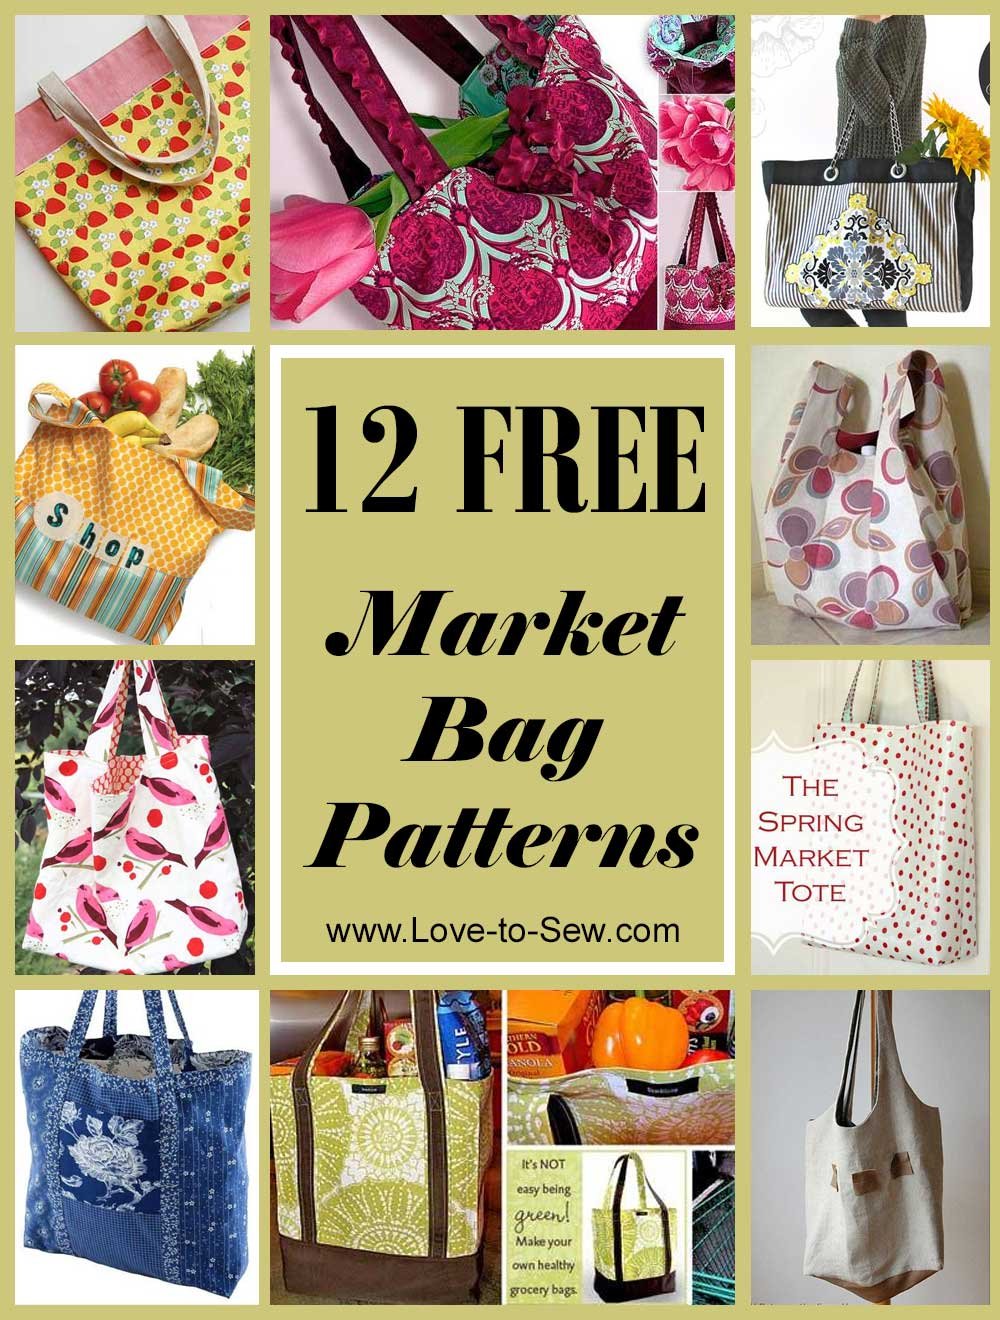 Free Bag Patterns - Patterntrace